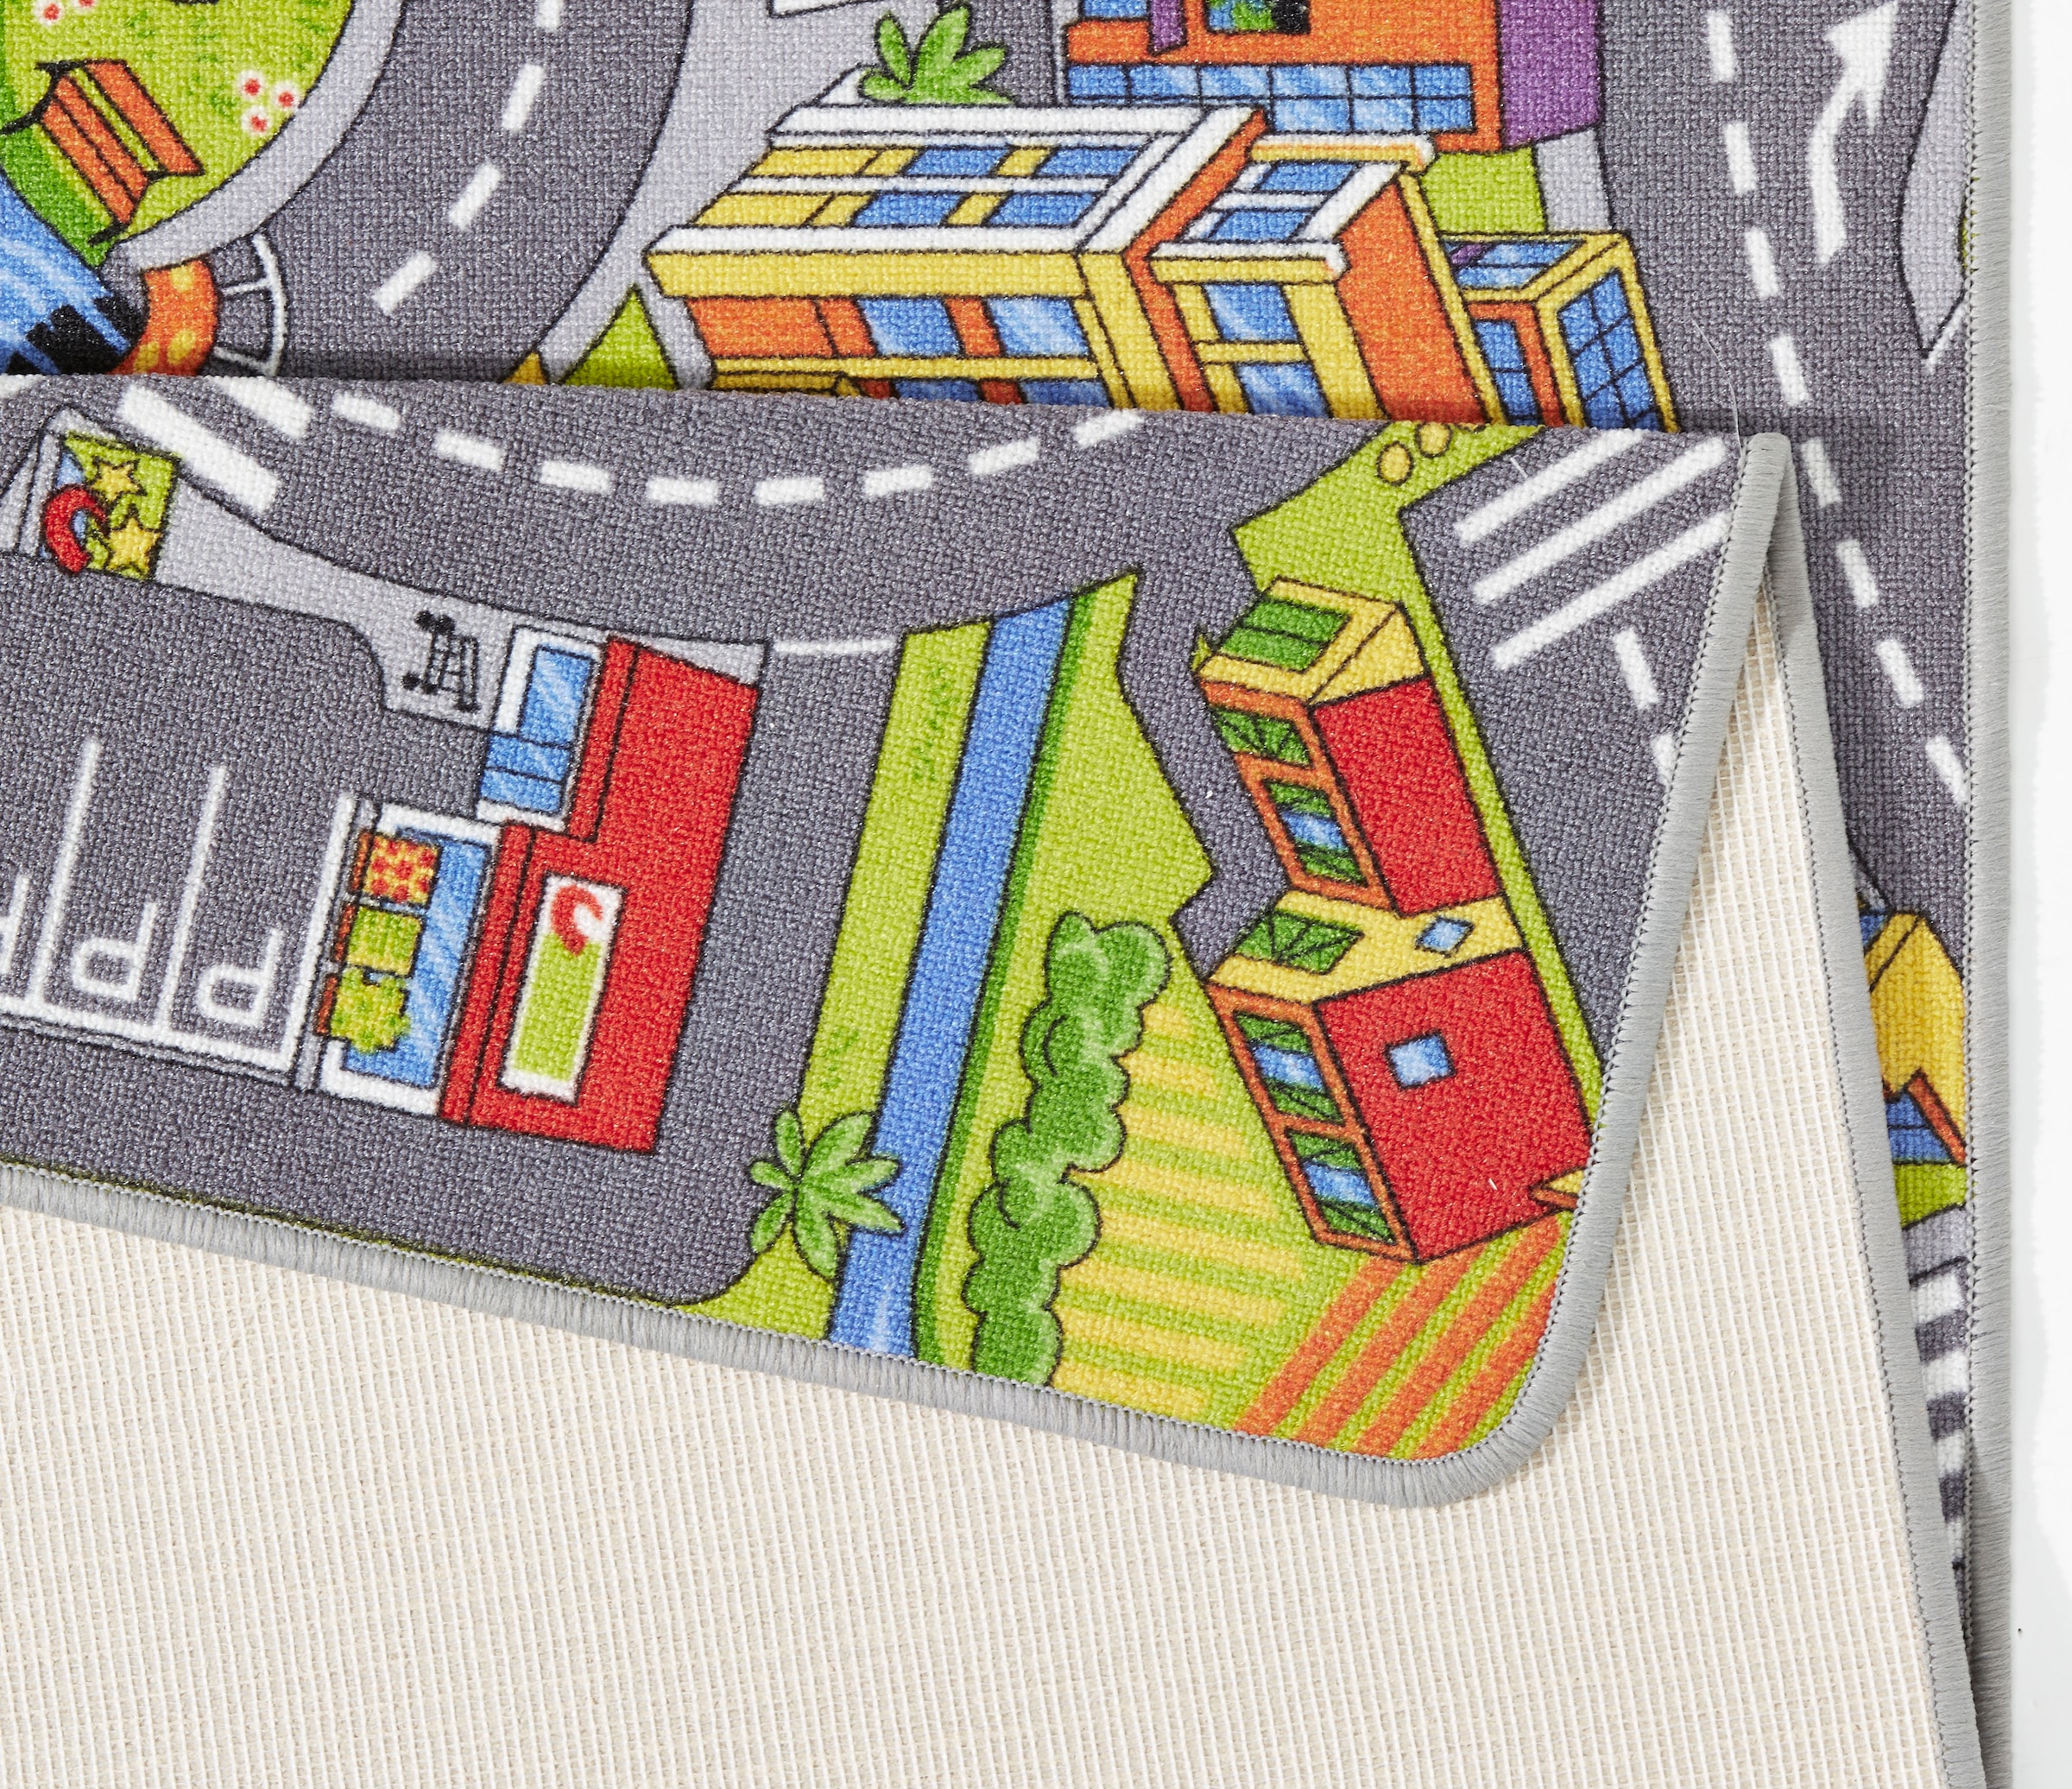 HANSE Home Kinderteppich »Smart City«, rechteckig, Kurzflor, Kinderteppich, Rutschfest, Spielteppich, Kinderzimmer